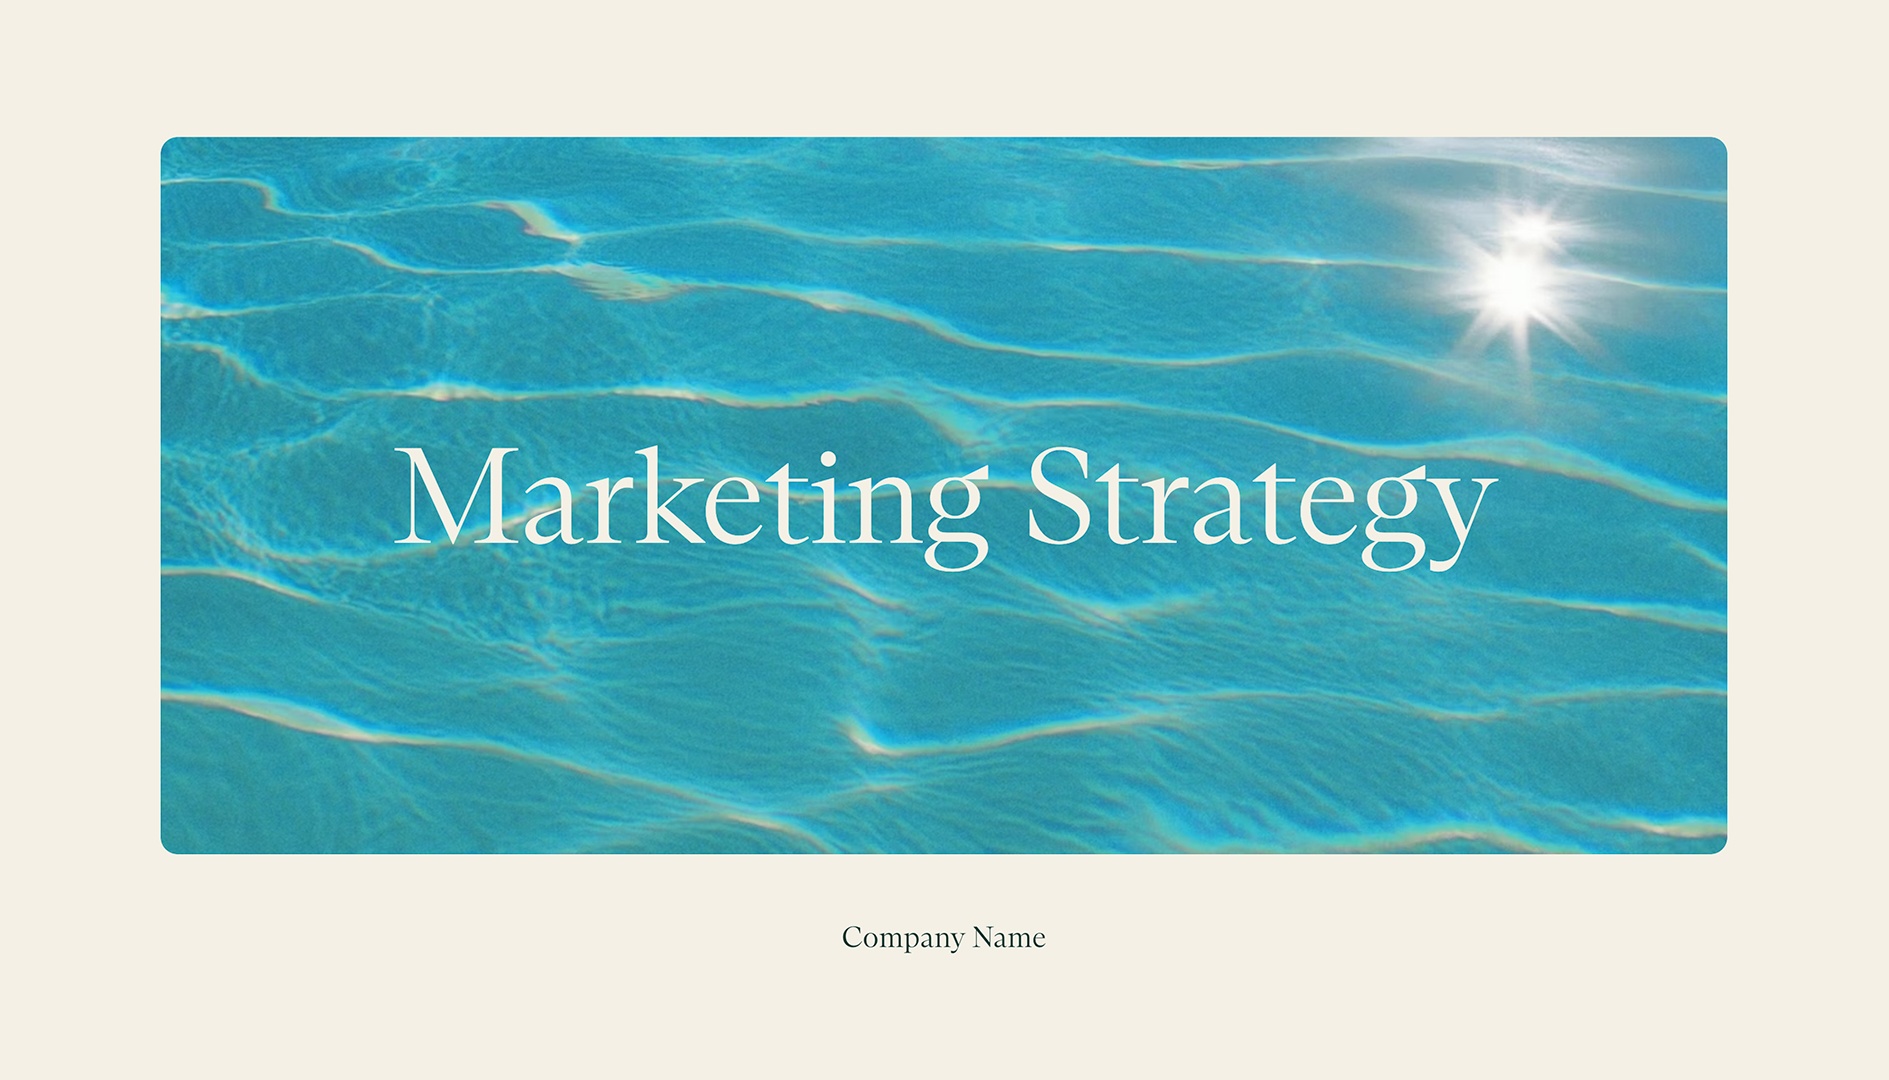 Marketing Strategy - Intro